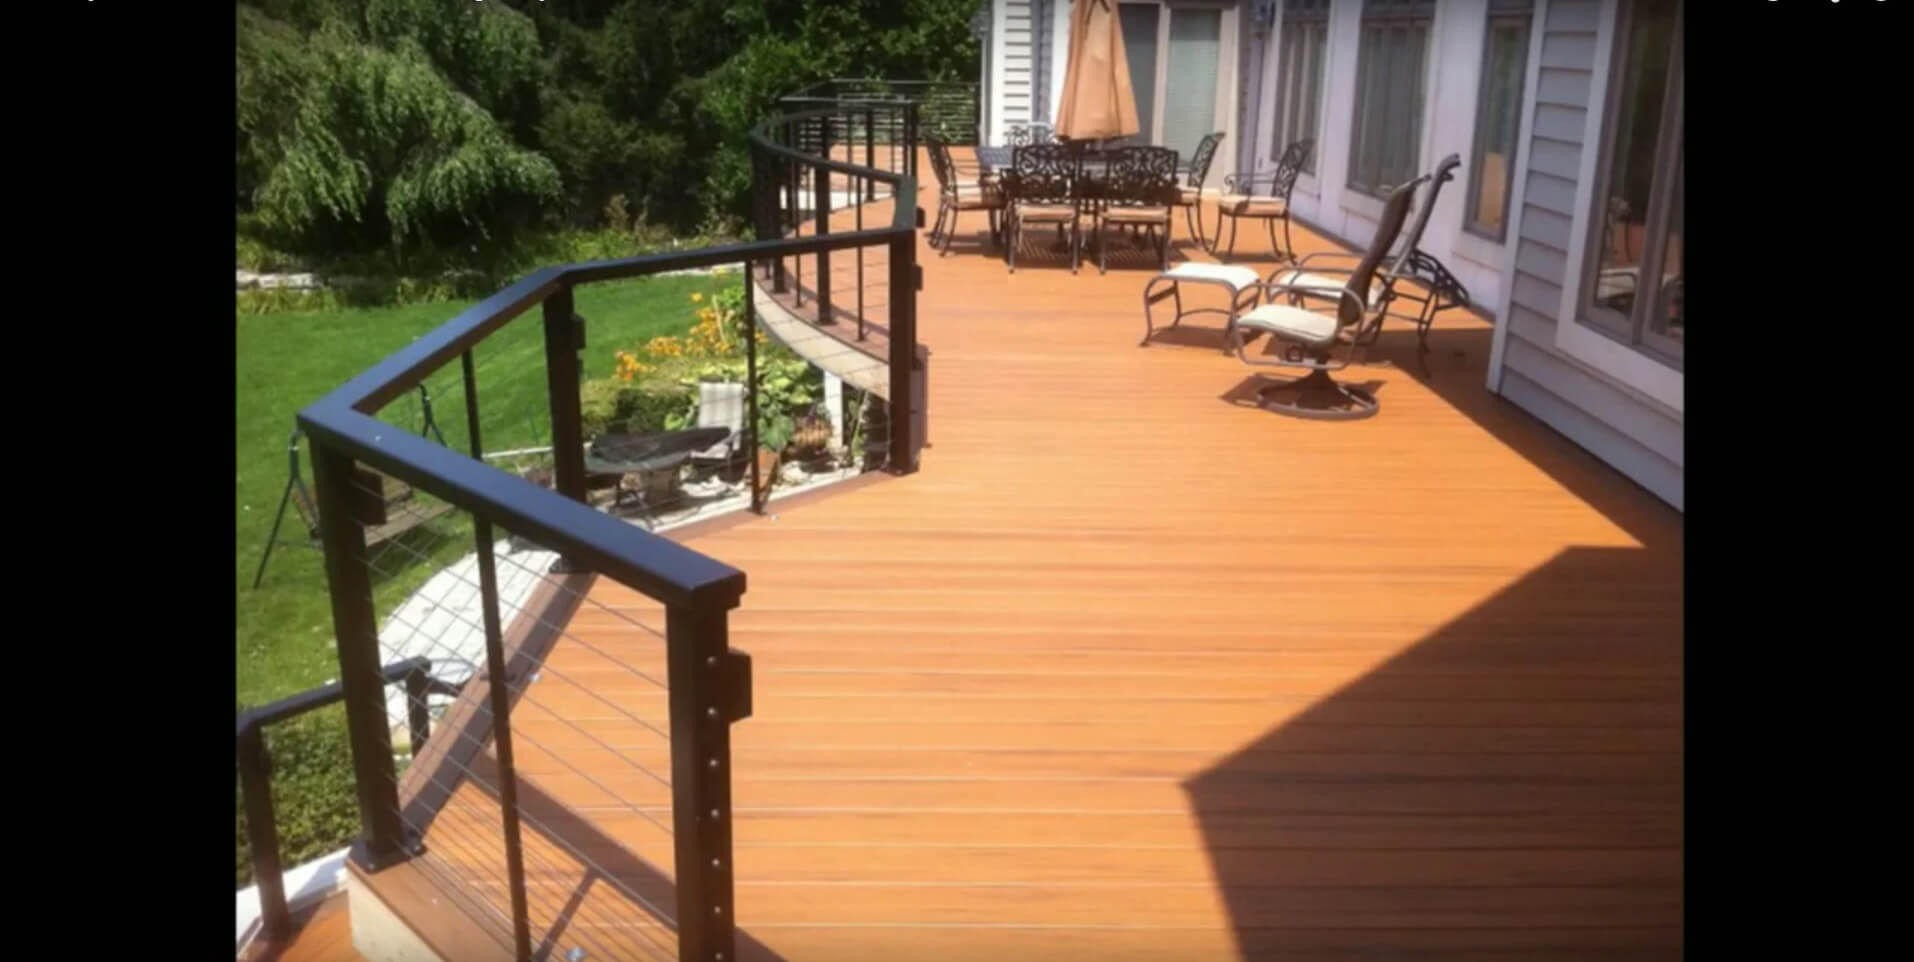 Custom backyard deck with seating area and railing